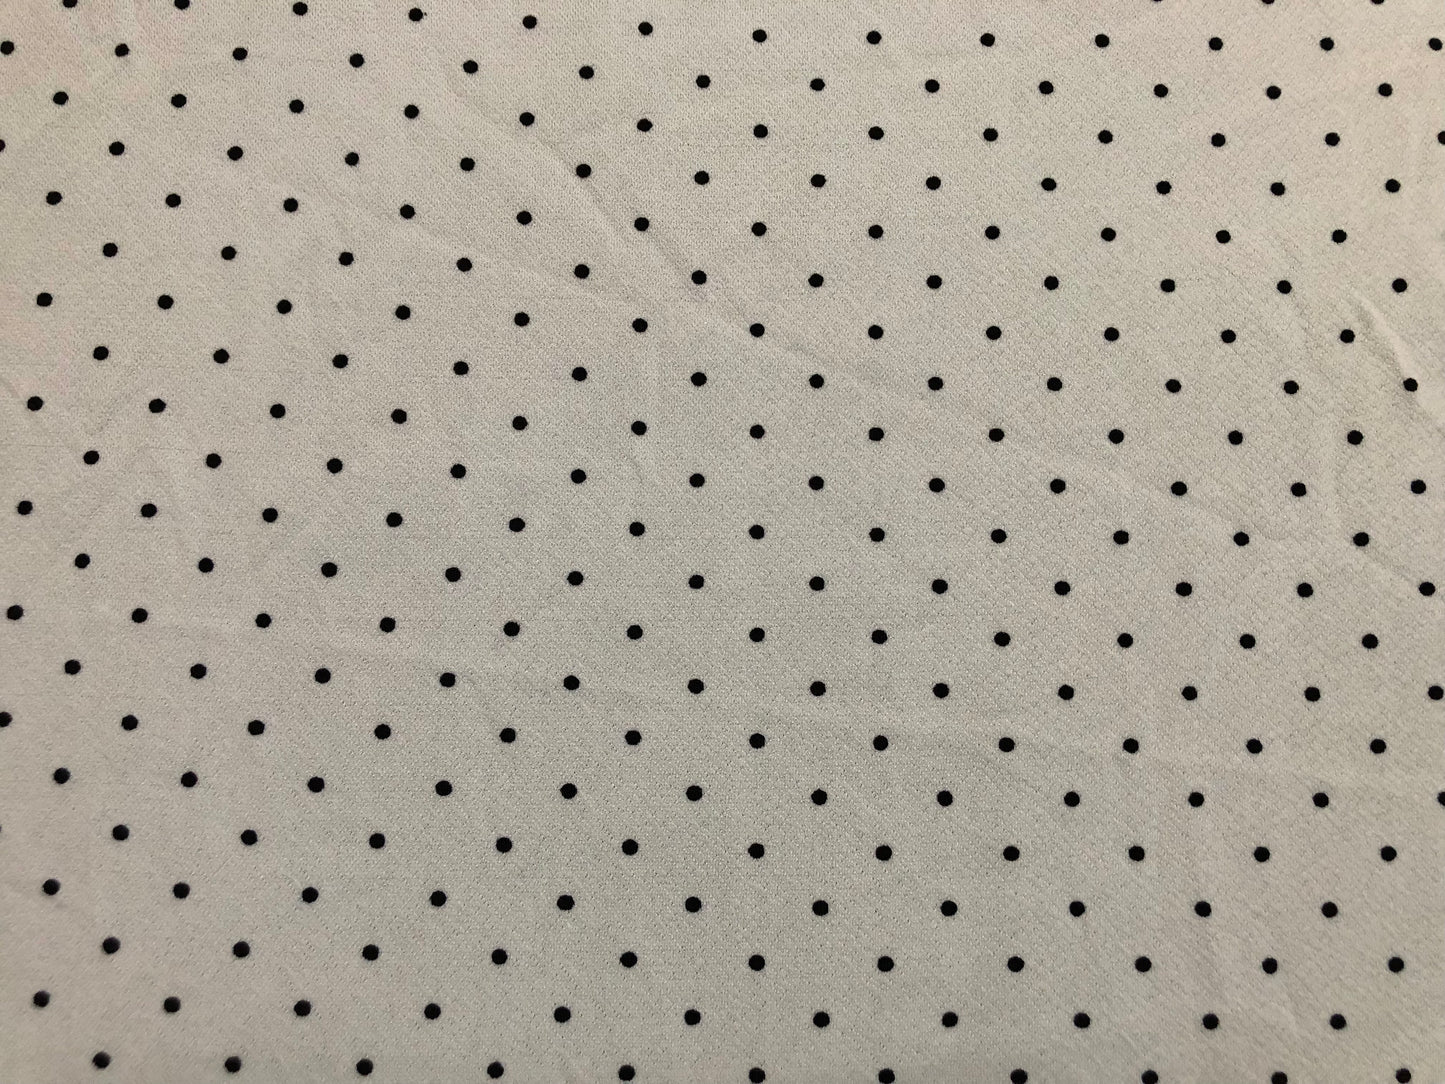 Ivory Black Polka Dots Liverpool Print Fabric